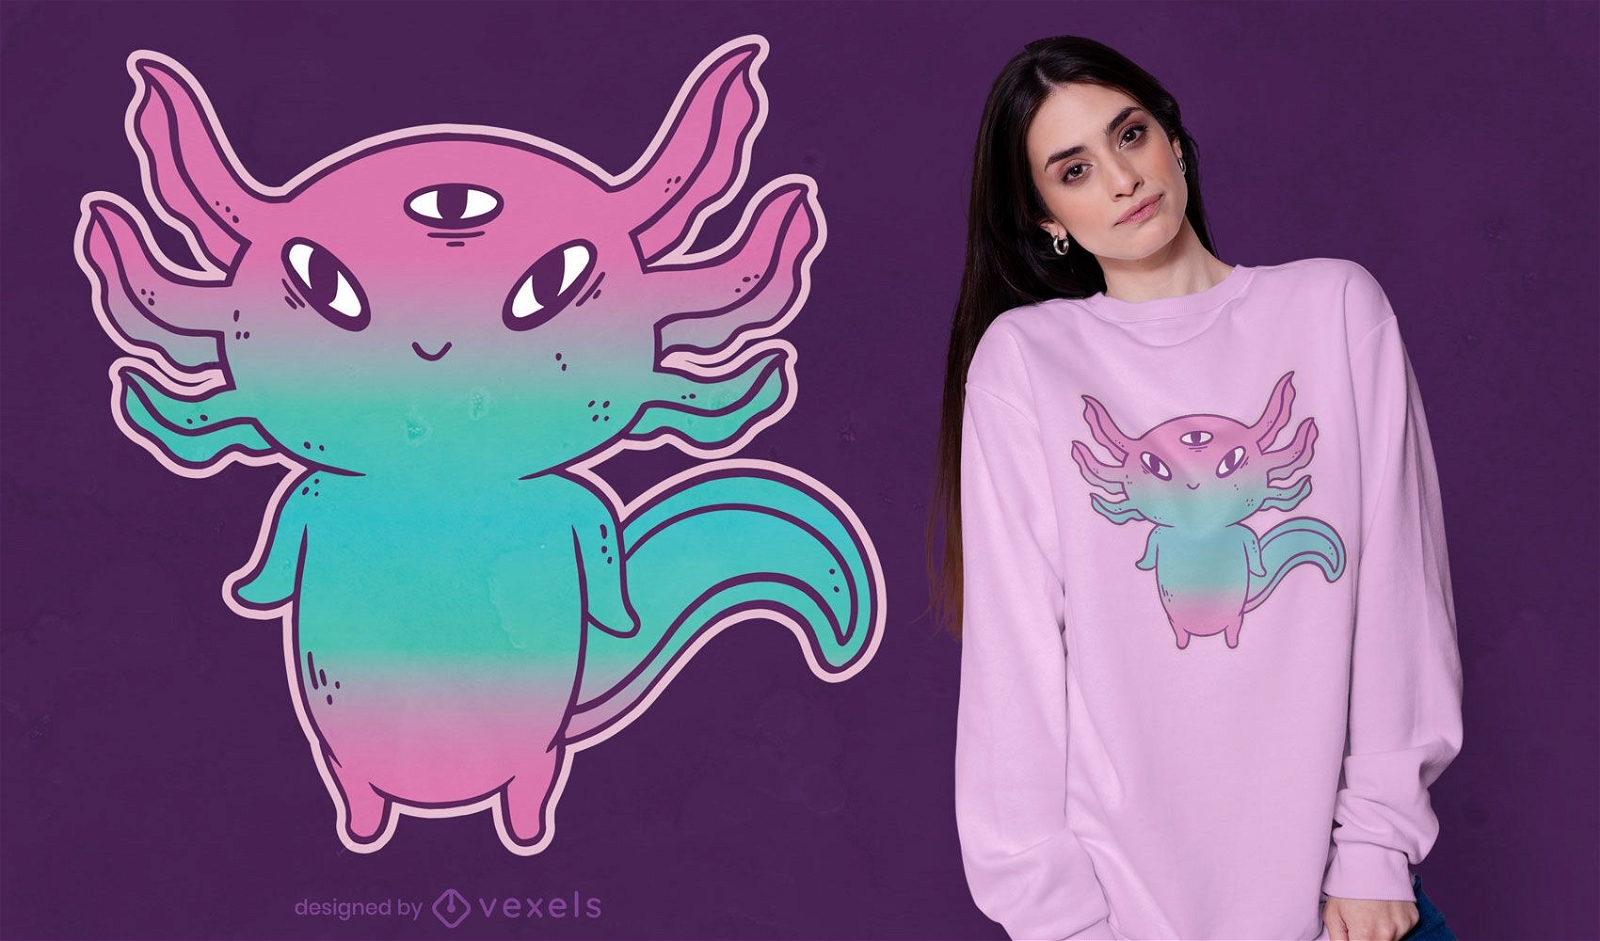 Mutant axolotl t-shirt design